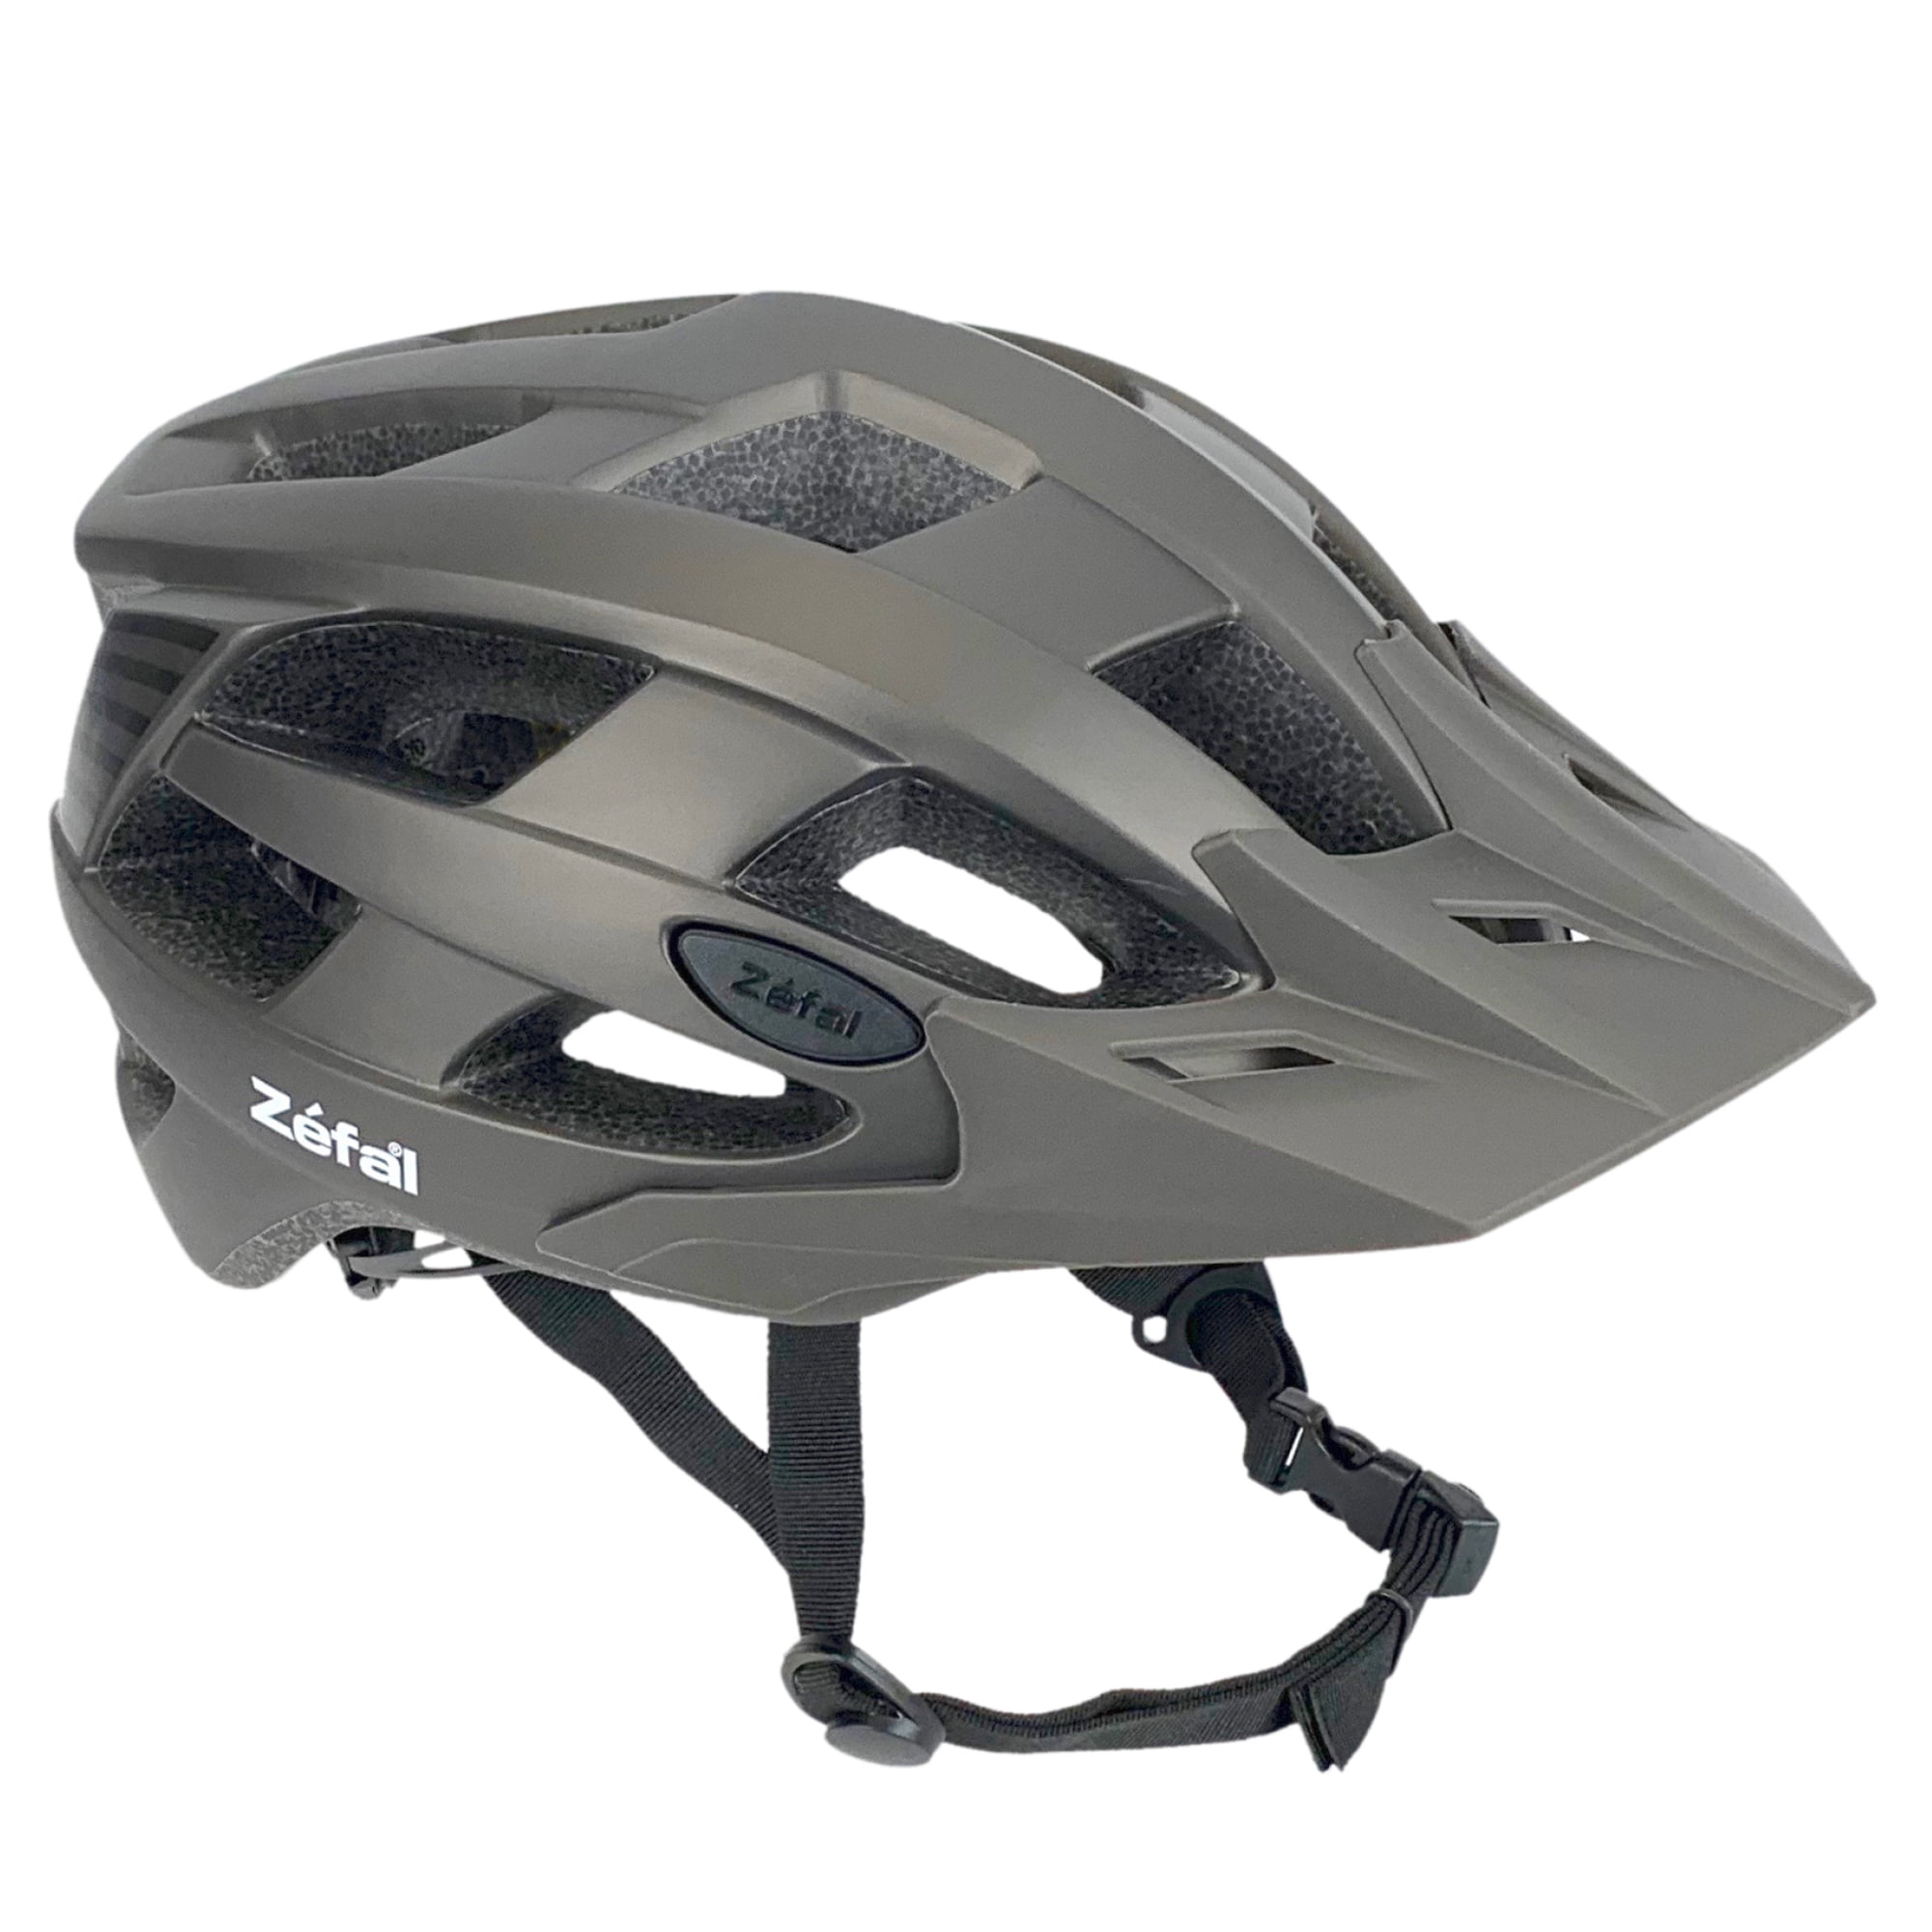 NEW Unisex Adult MTB Bike Bicycle Cycling Hoverboard Helmet Visor Adjustable gcn 